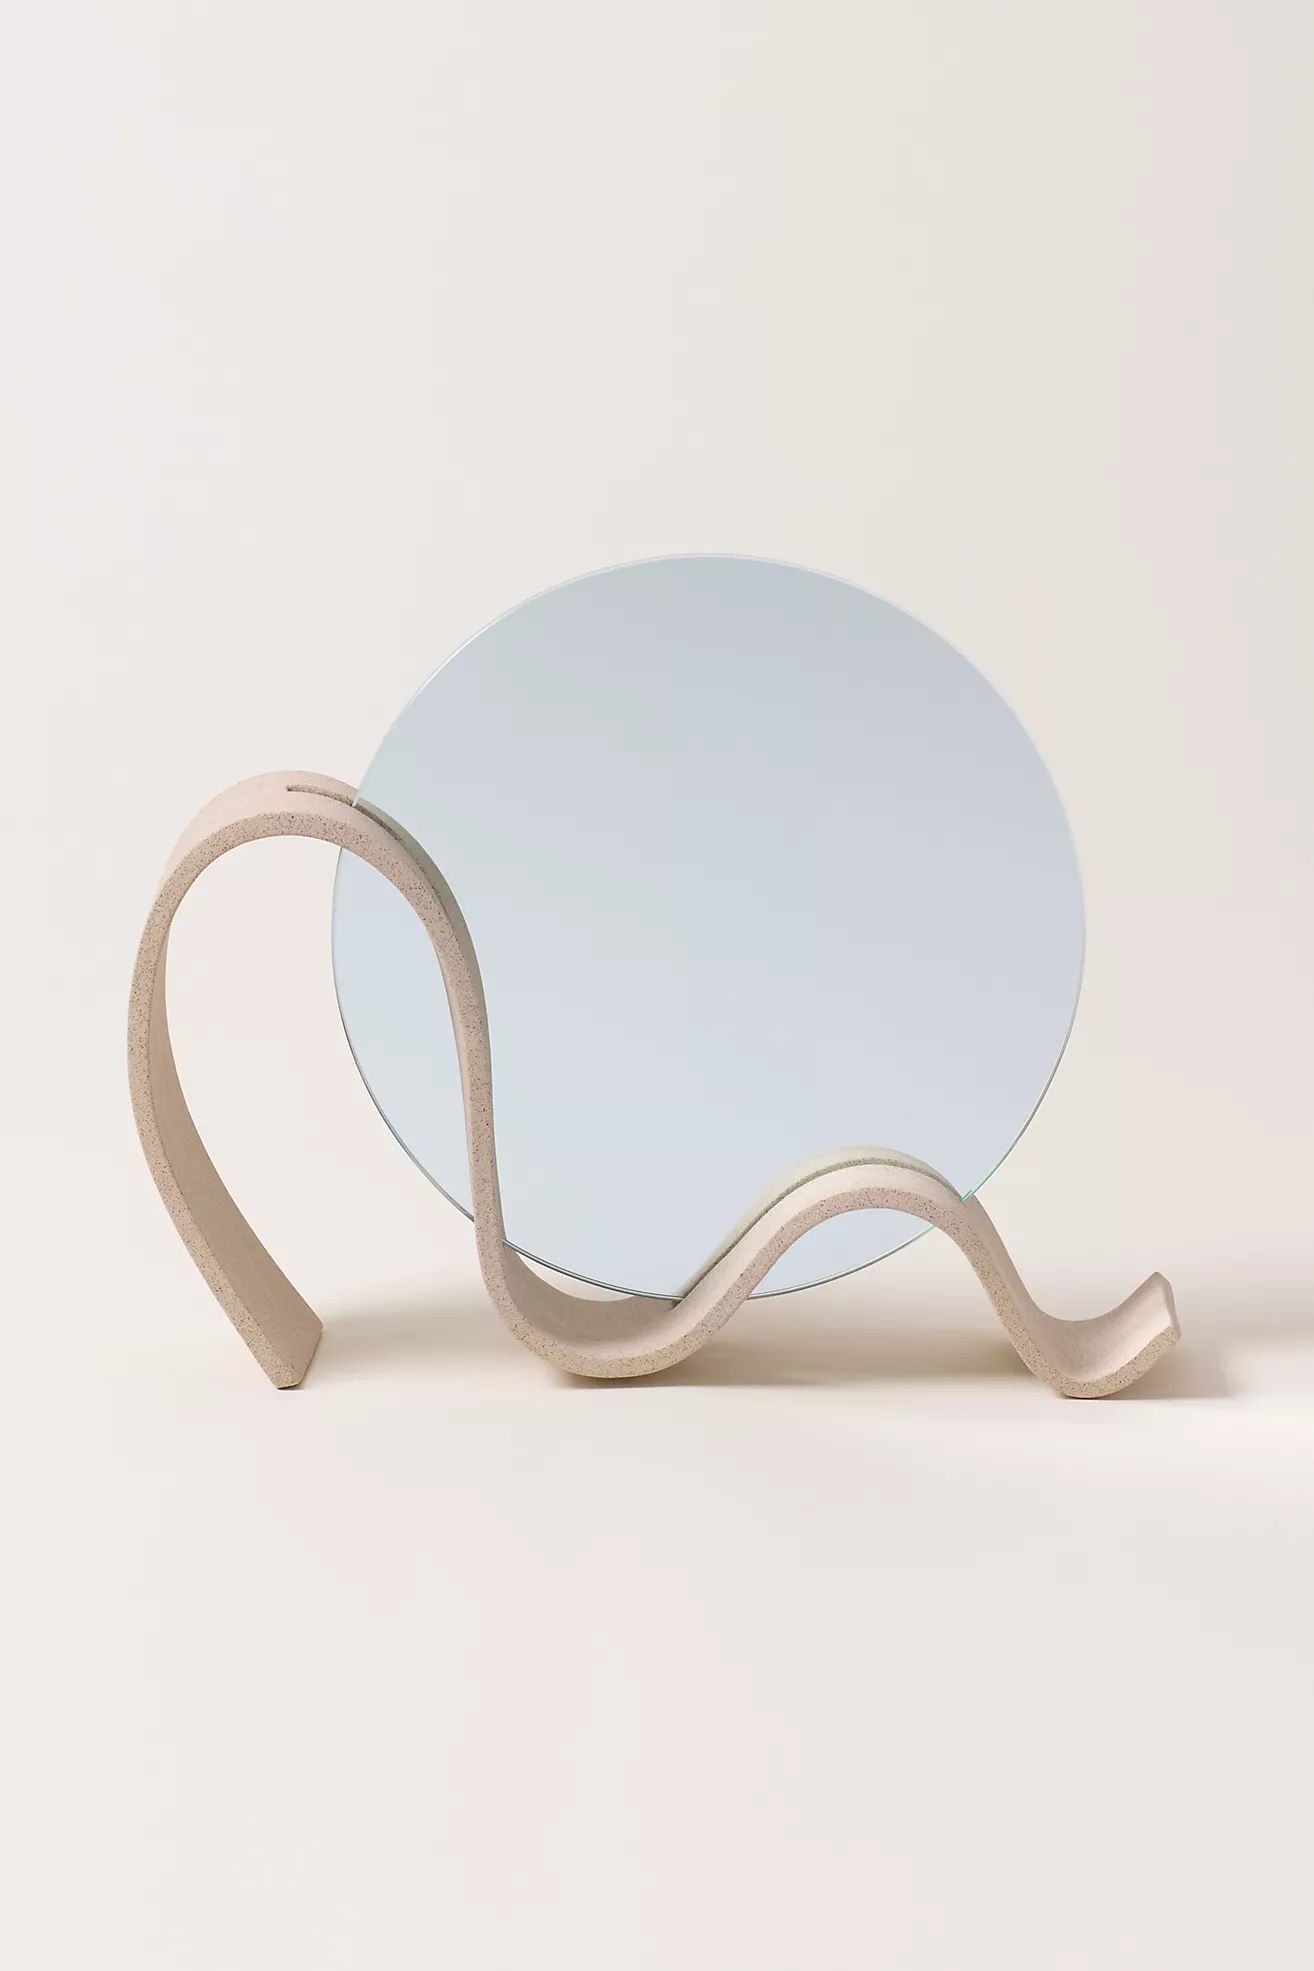 SIN Ceramic Wavee Table Mirror | Anthropologie (US)